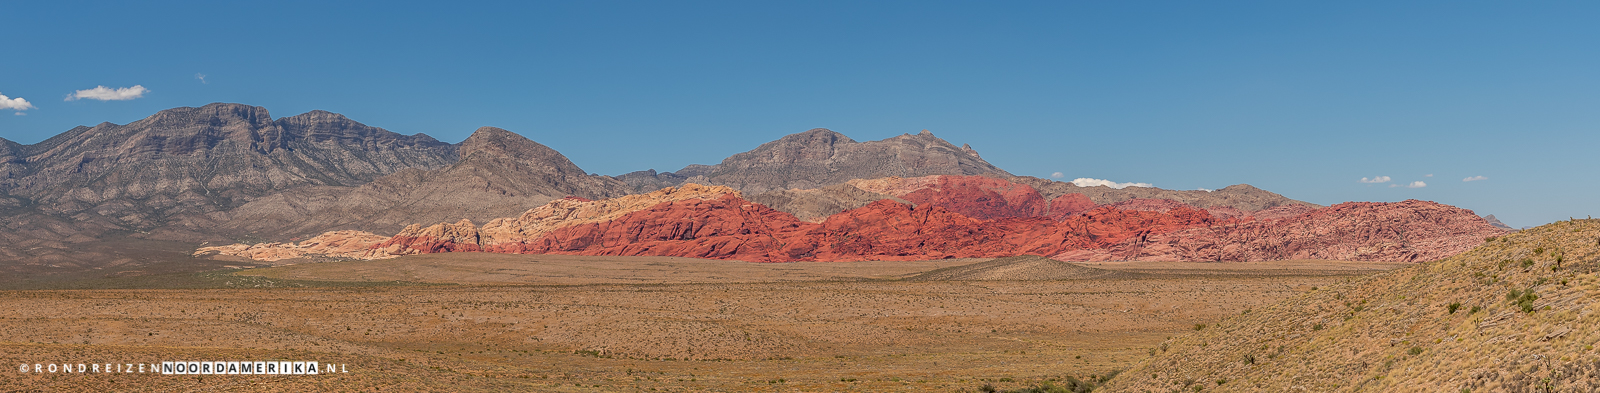 Red Rock Canyon panorama